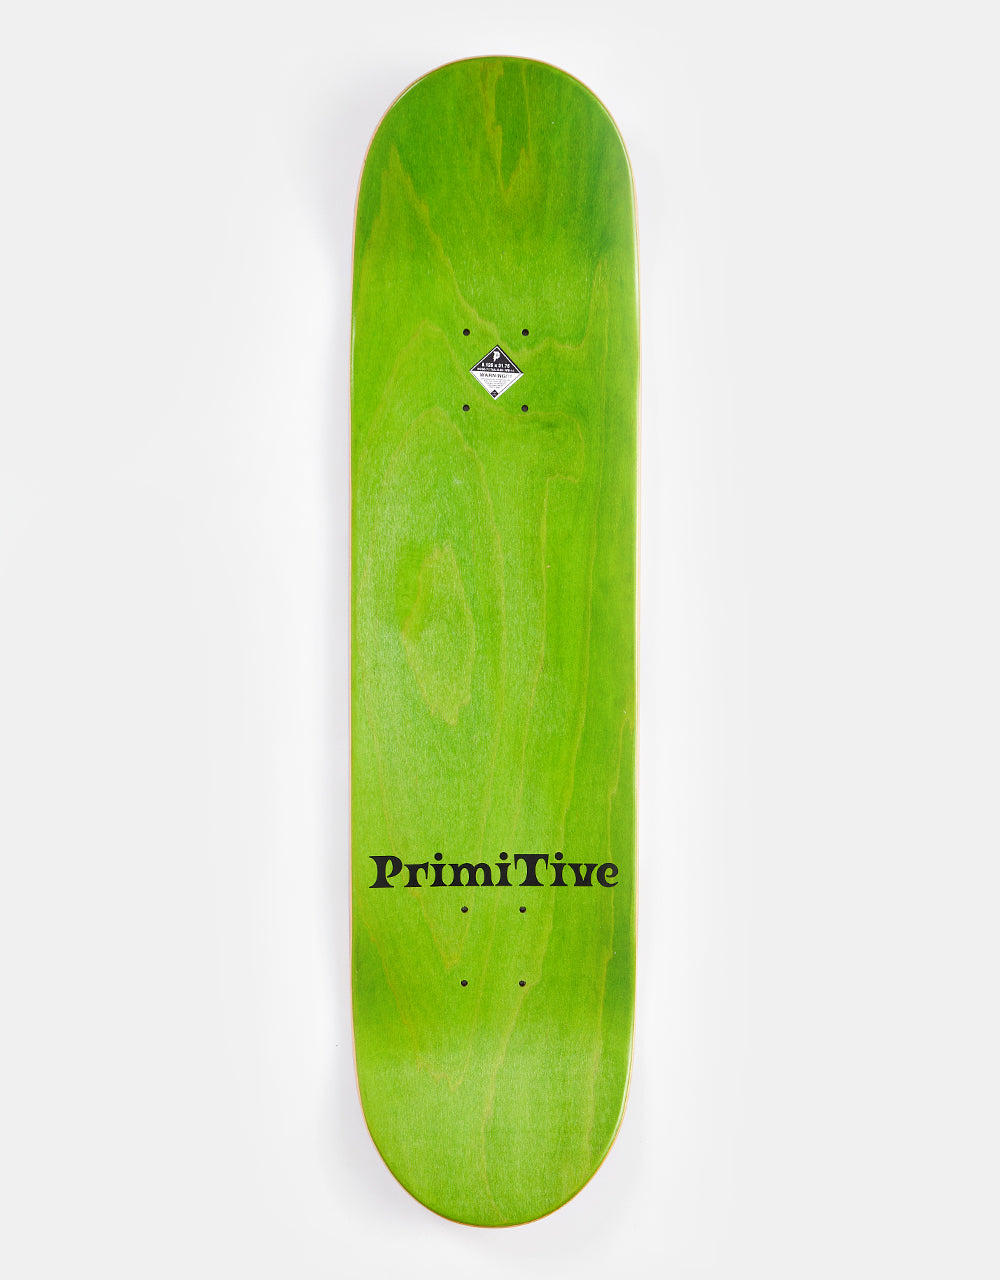 Primitive Desarmo Daydream Skateboard Deck - 8.125"